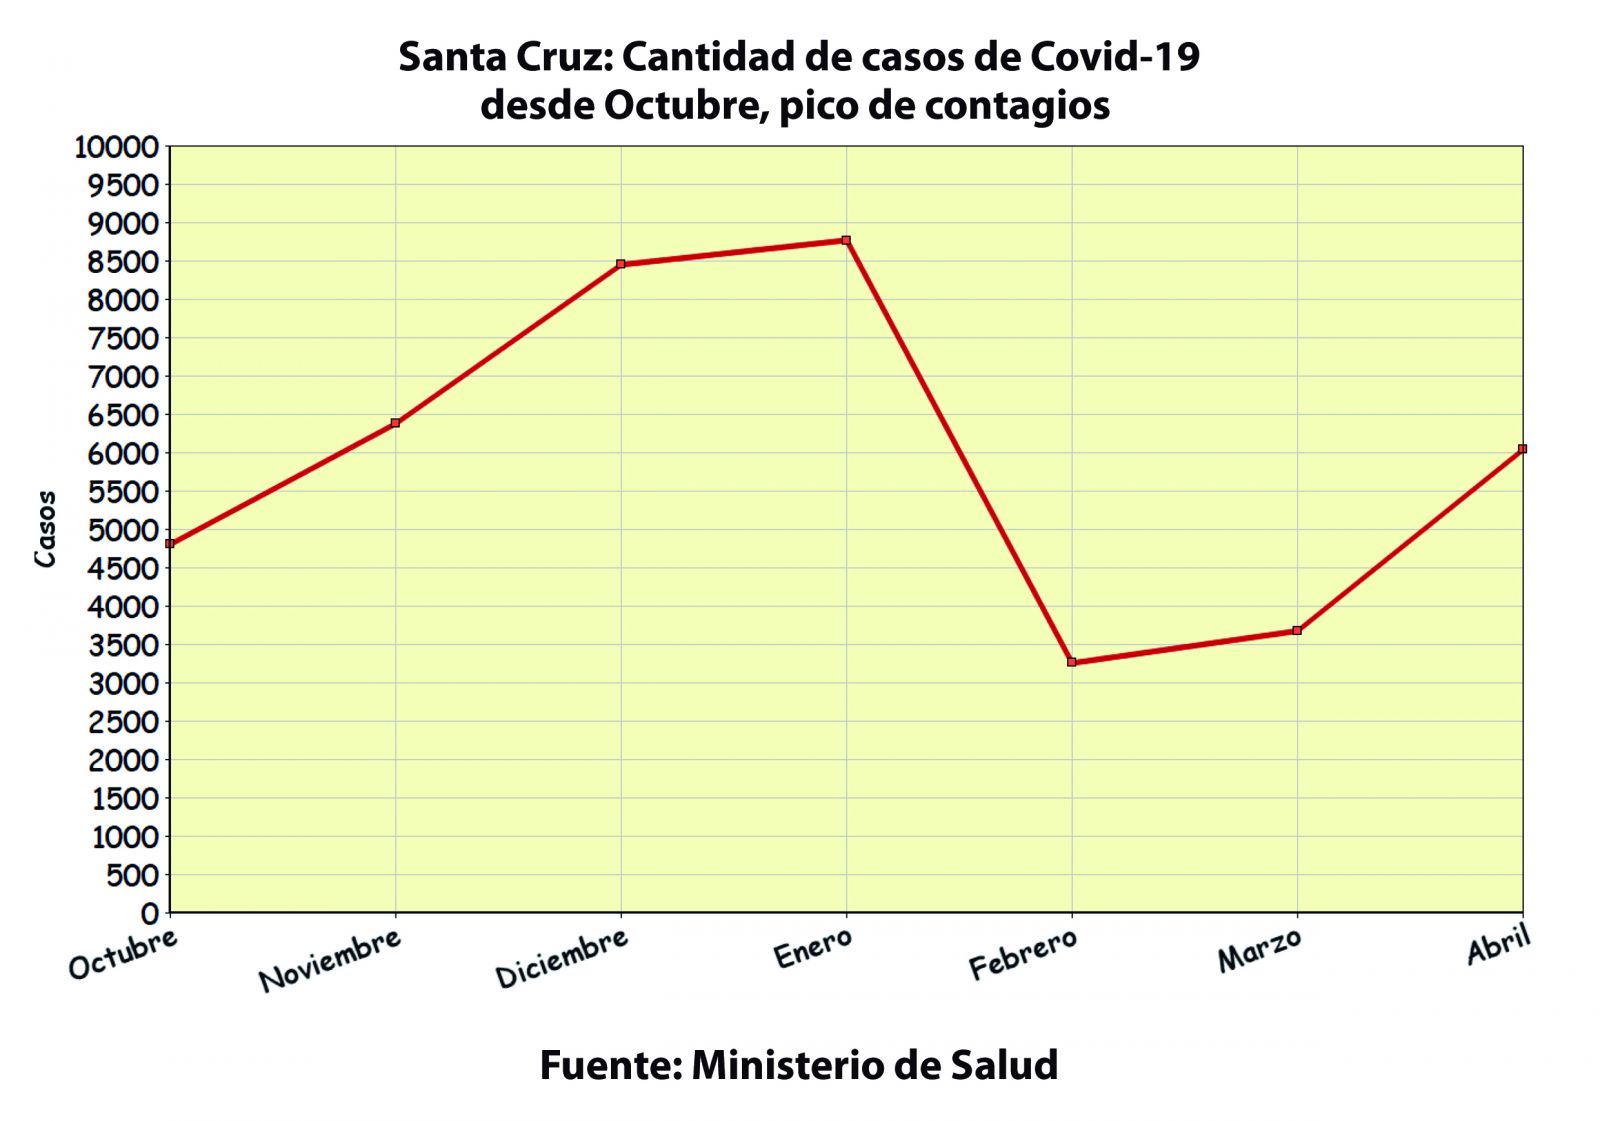 Casos positivos mes a mes desde octubre en Santa Cruz. 